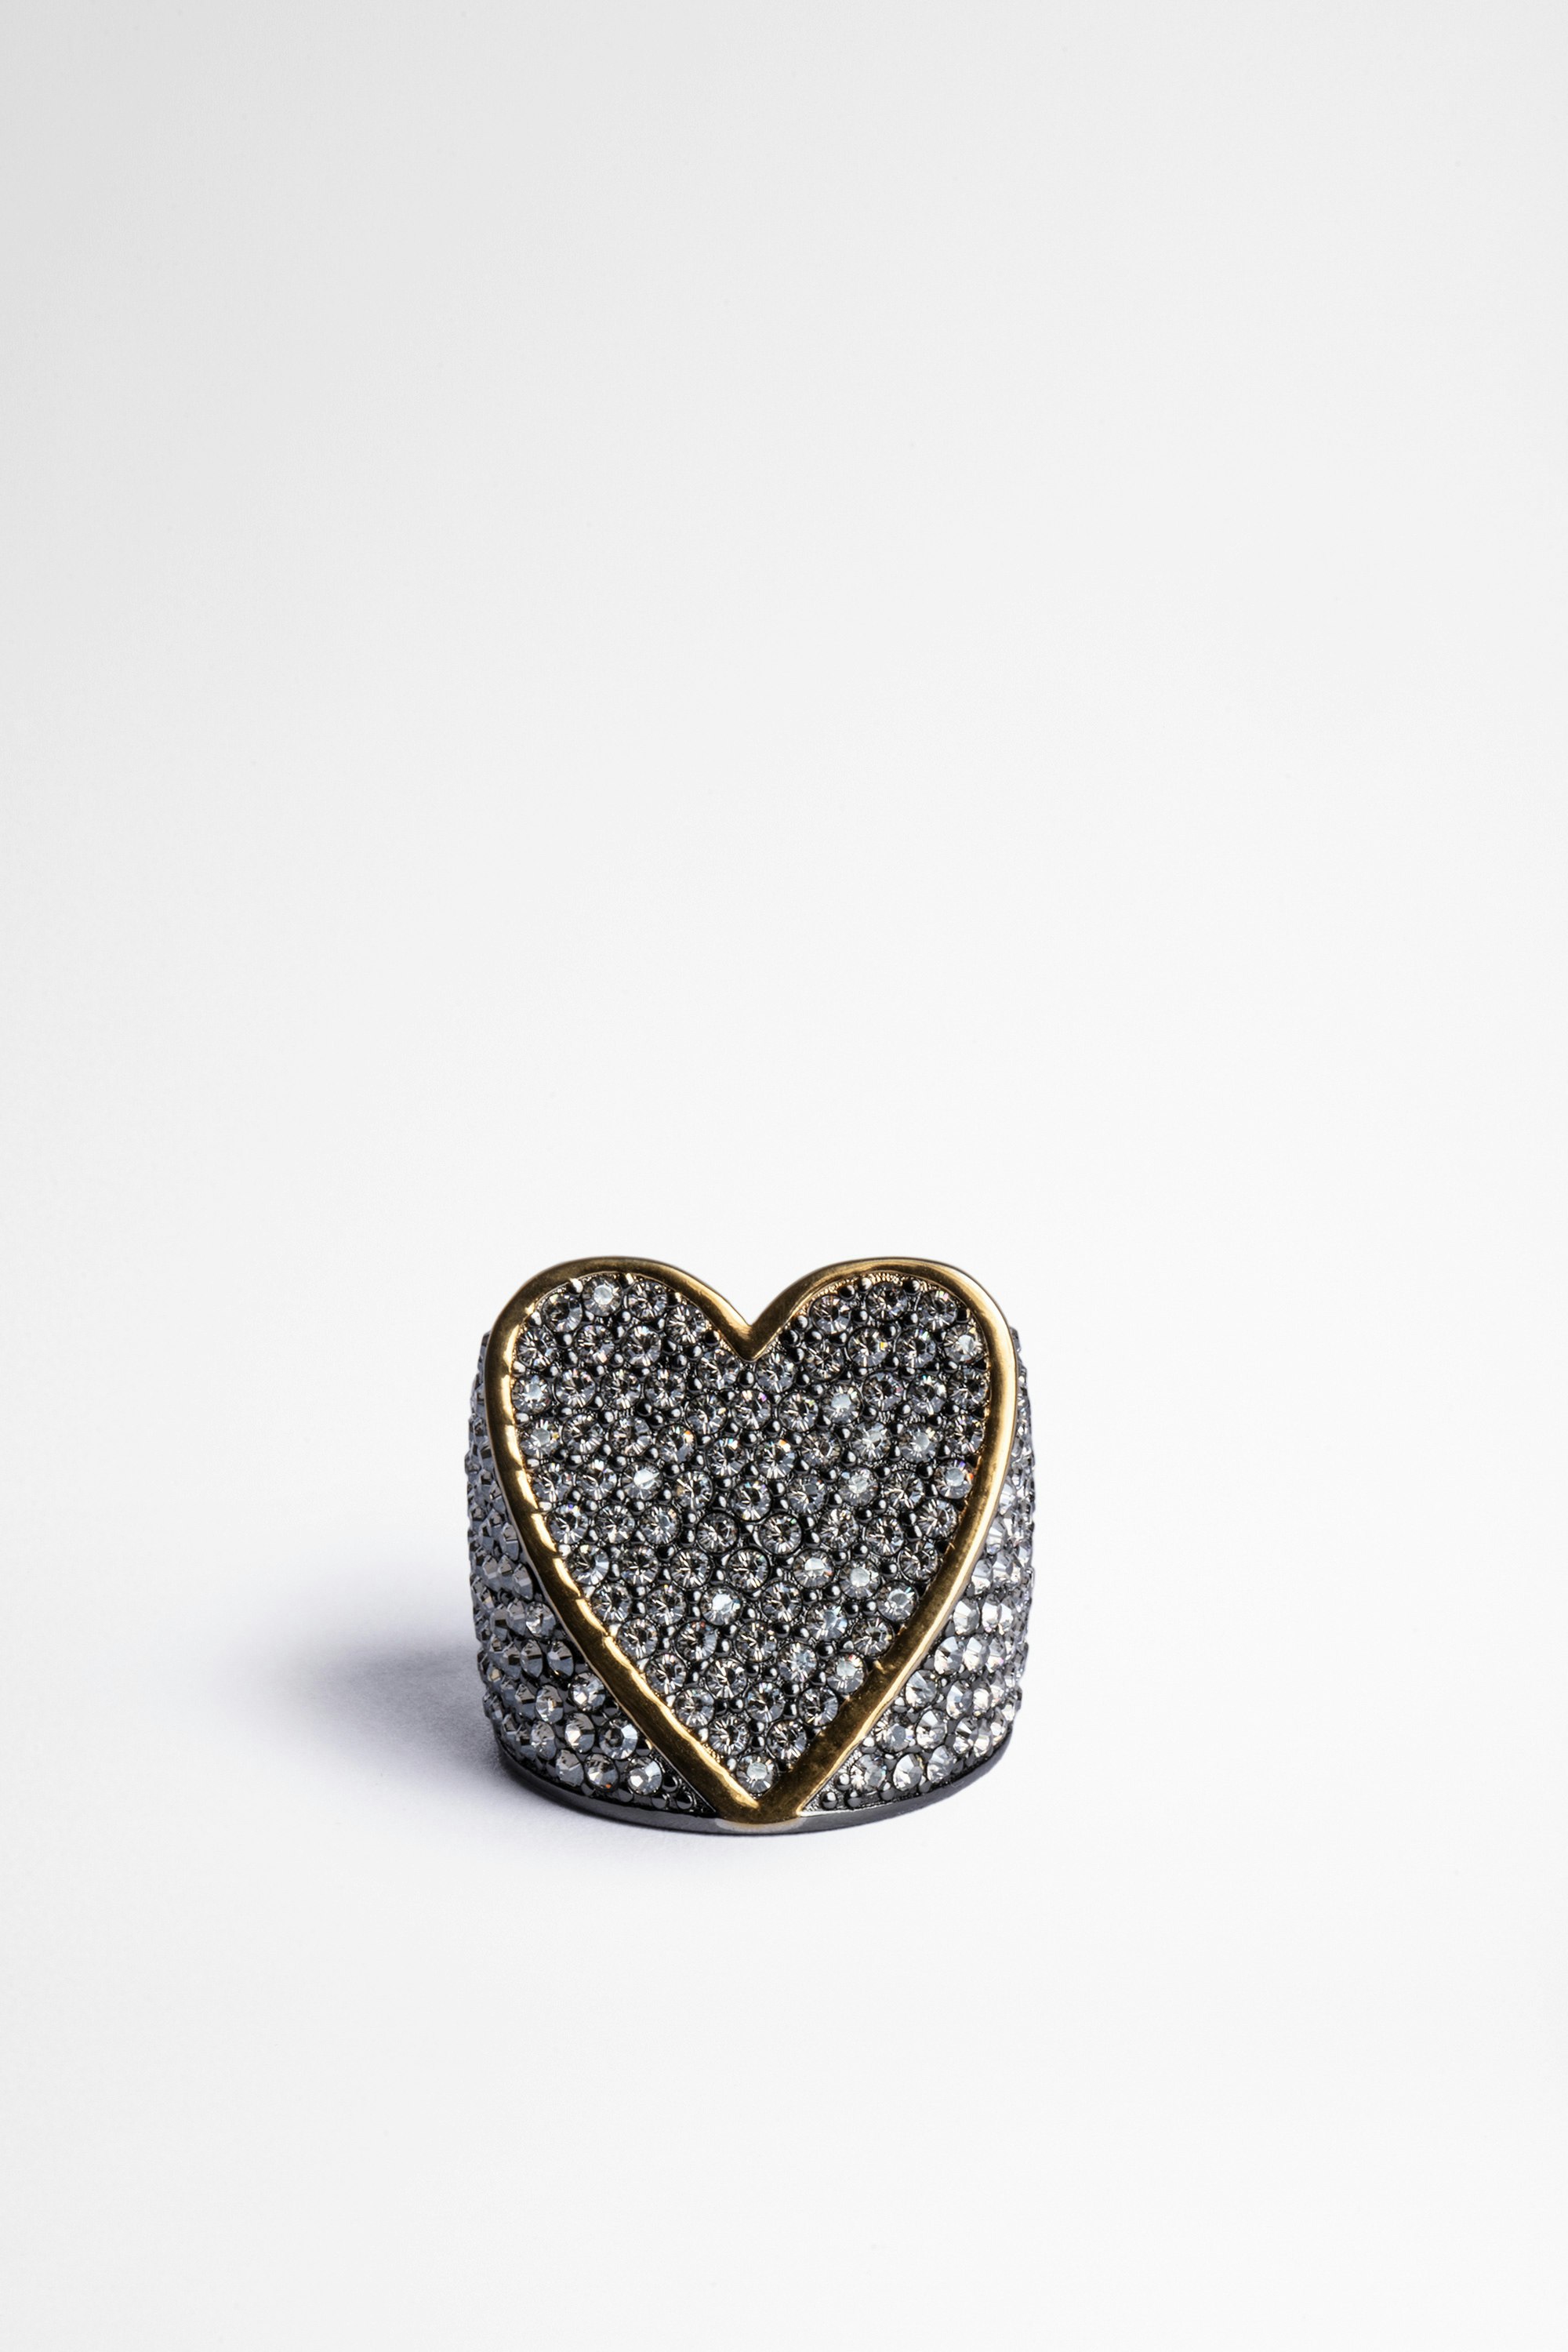 Idol Strass Ring - Brass heart ring with rhinestones.